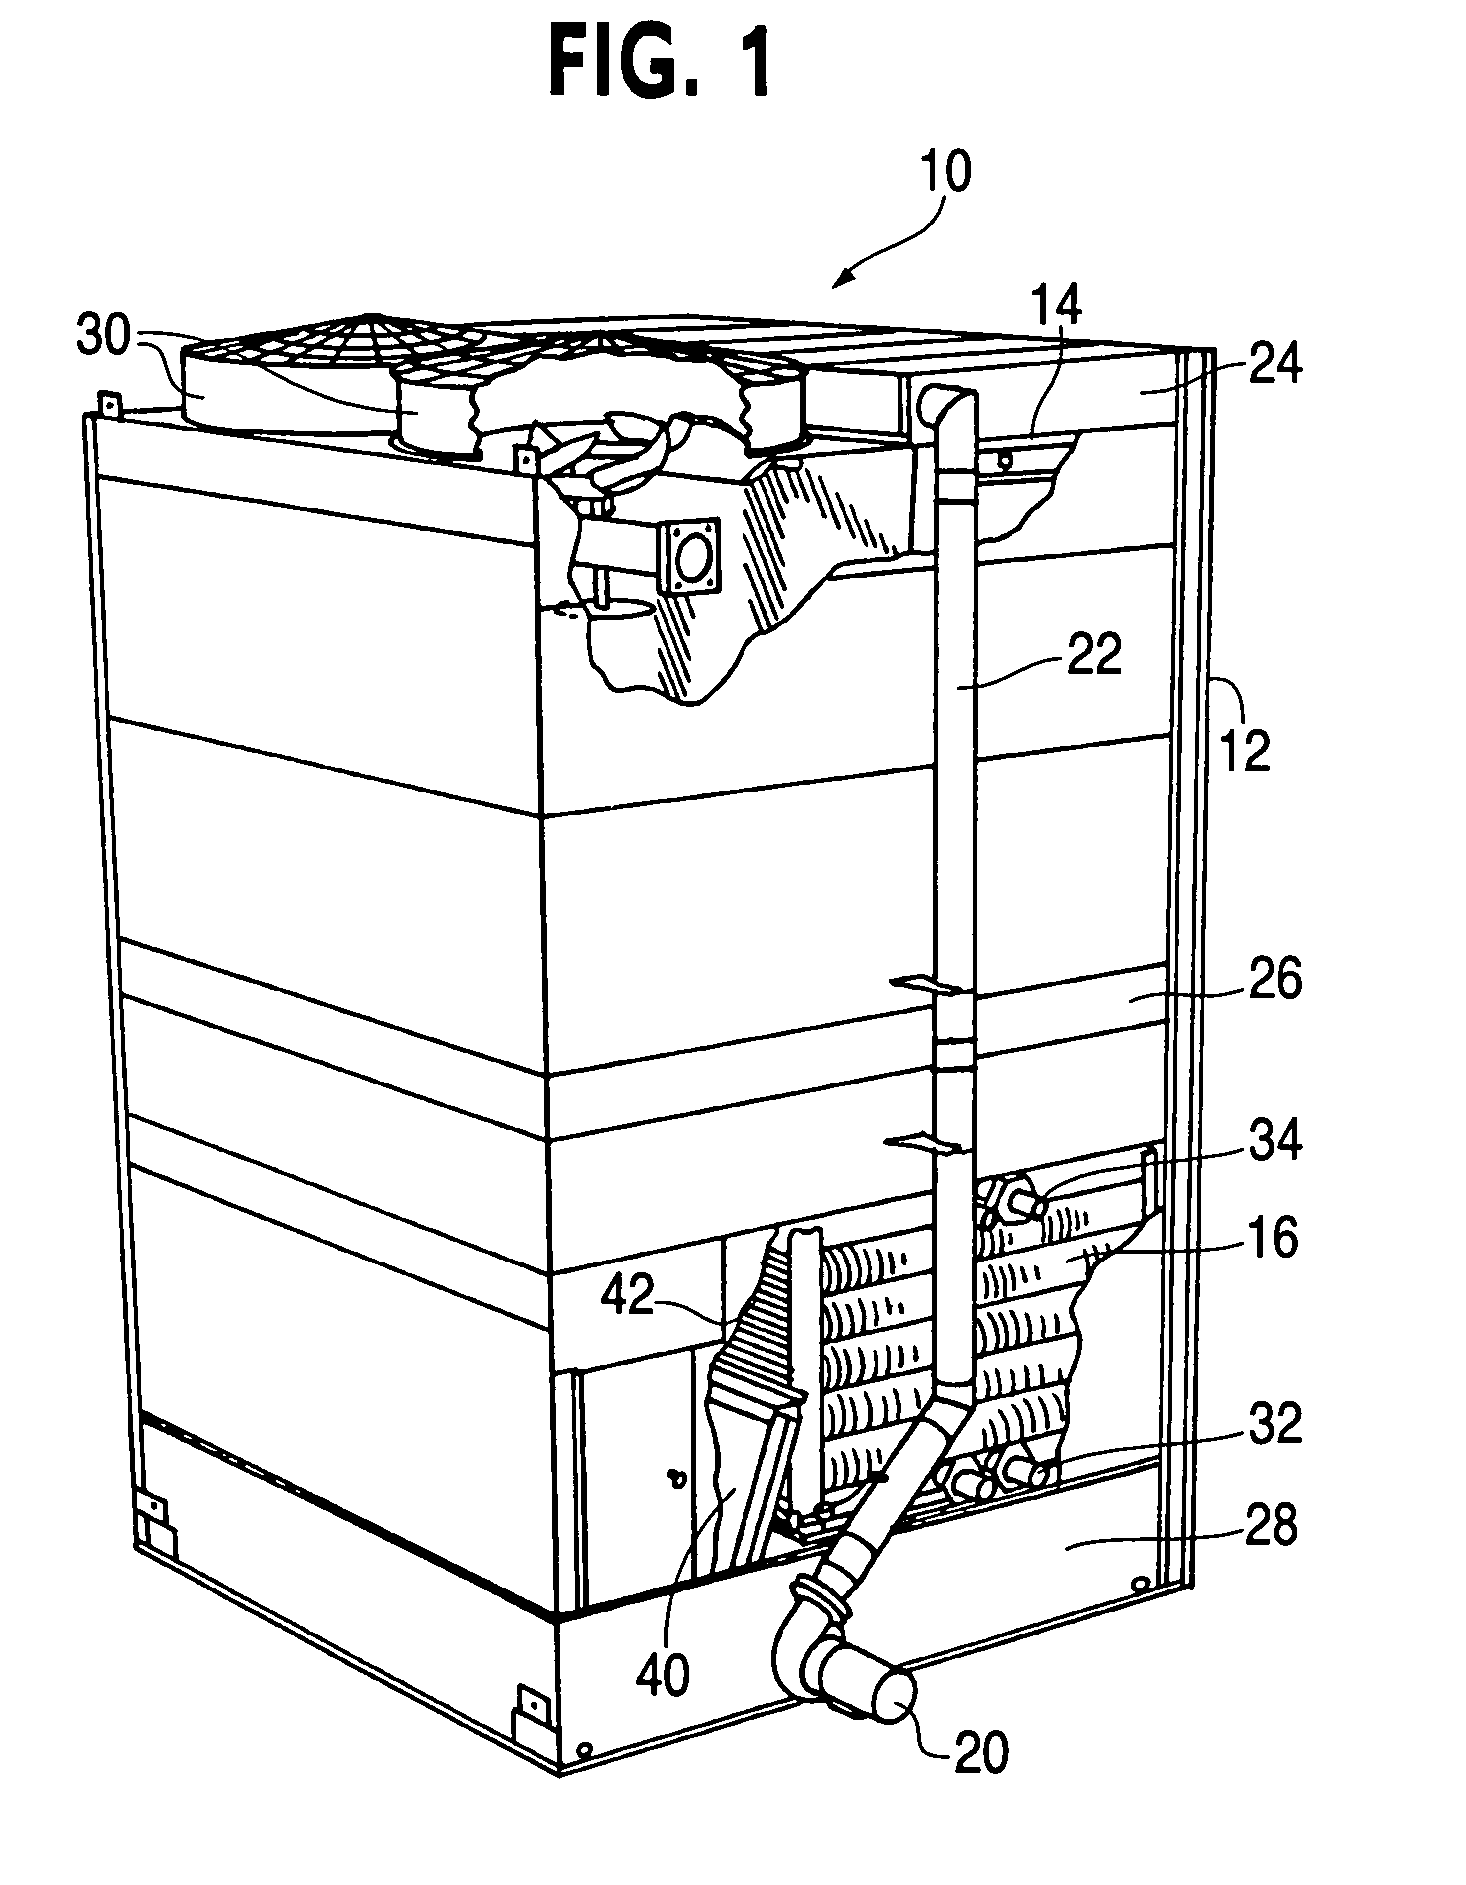 Fluid cooler with evaporative heat exchanger and intermediate distribution